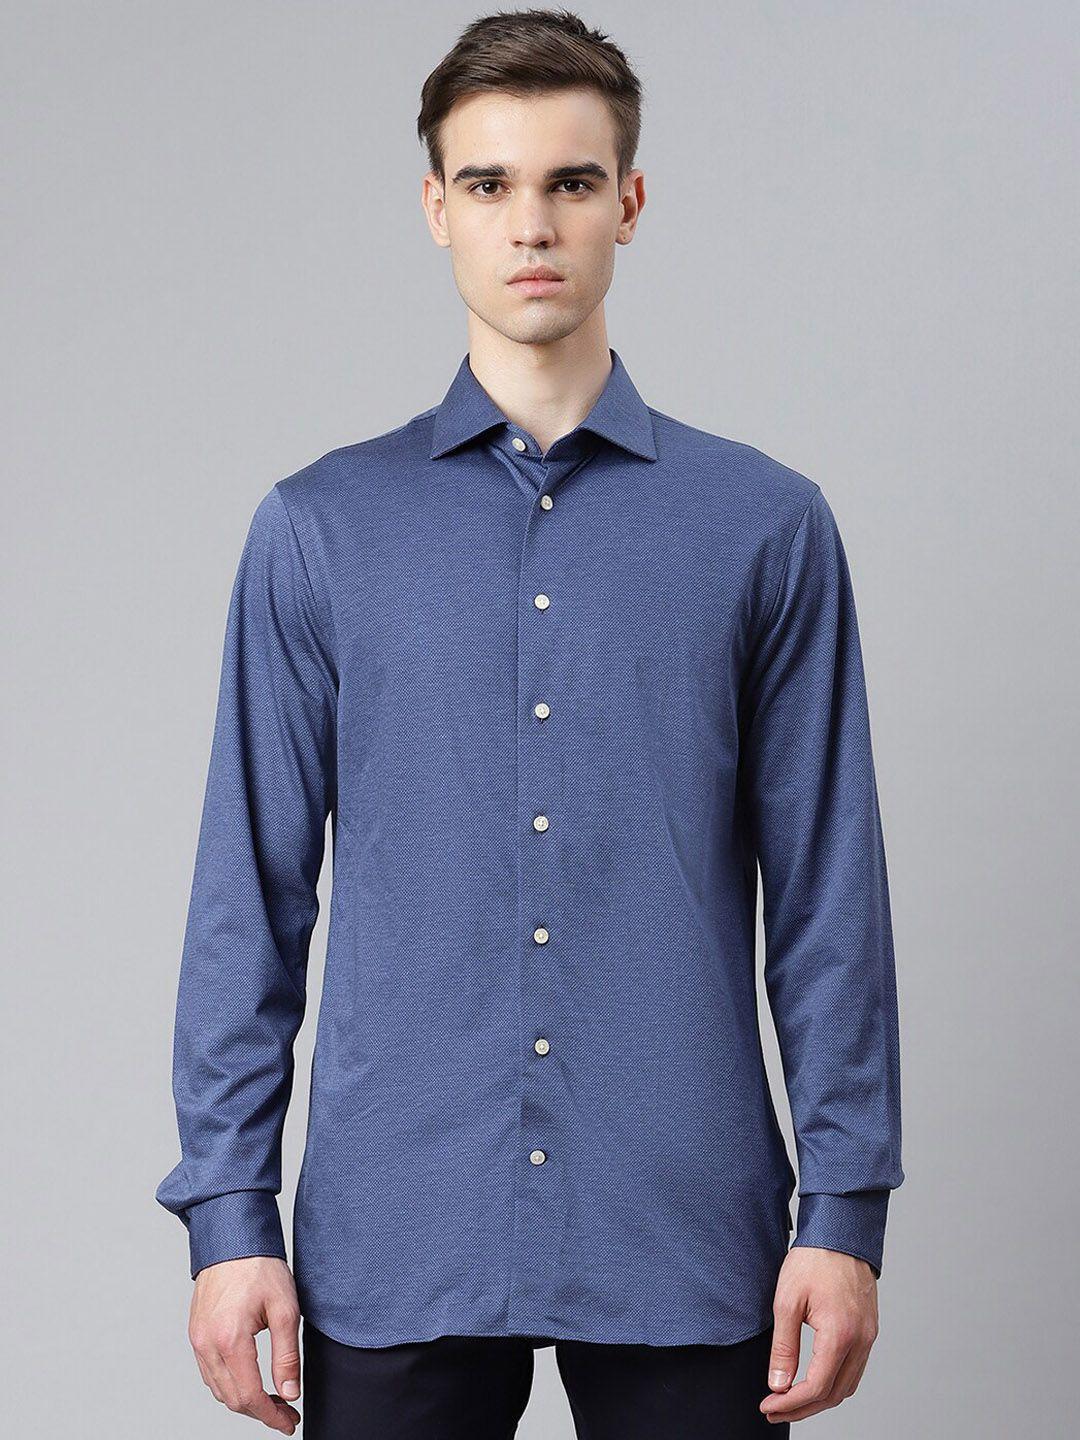 matinique men blue opaque self design cotton formal shirt